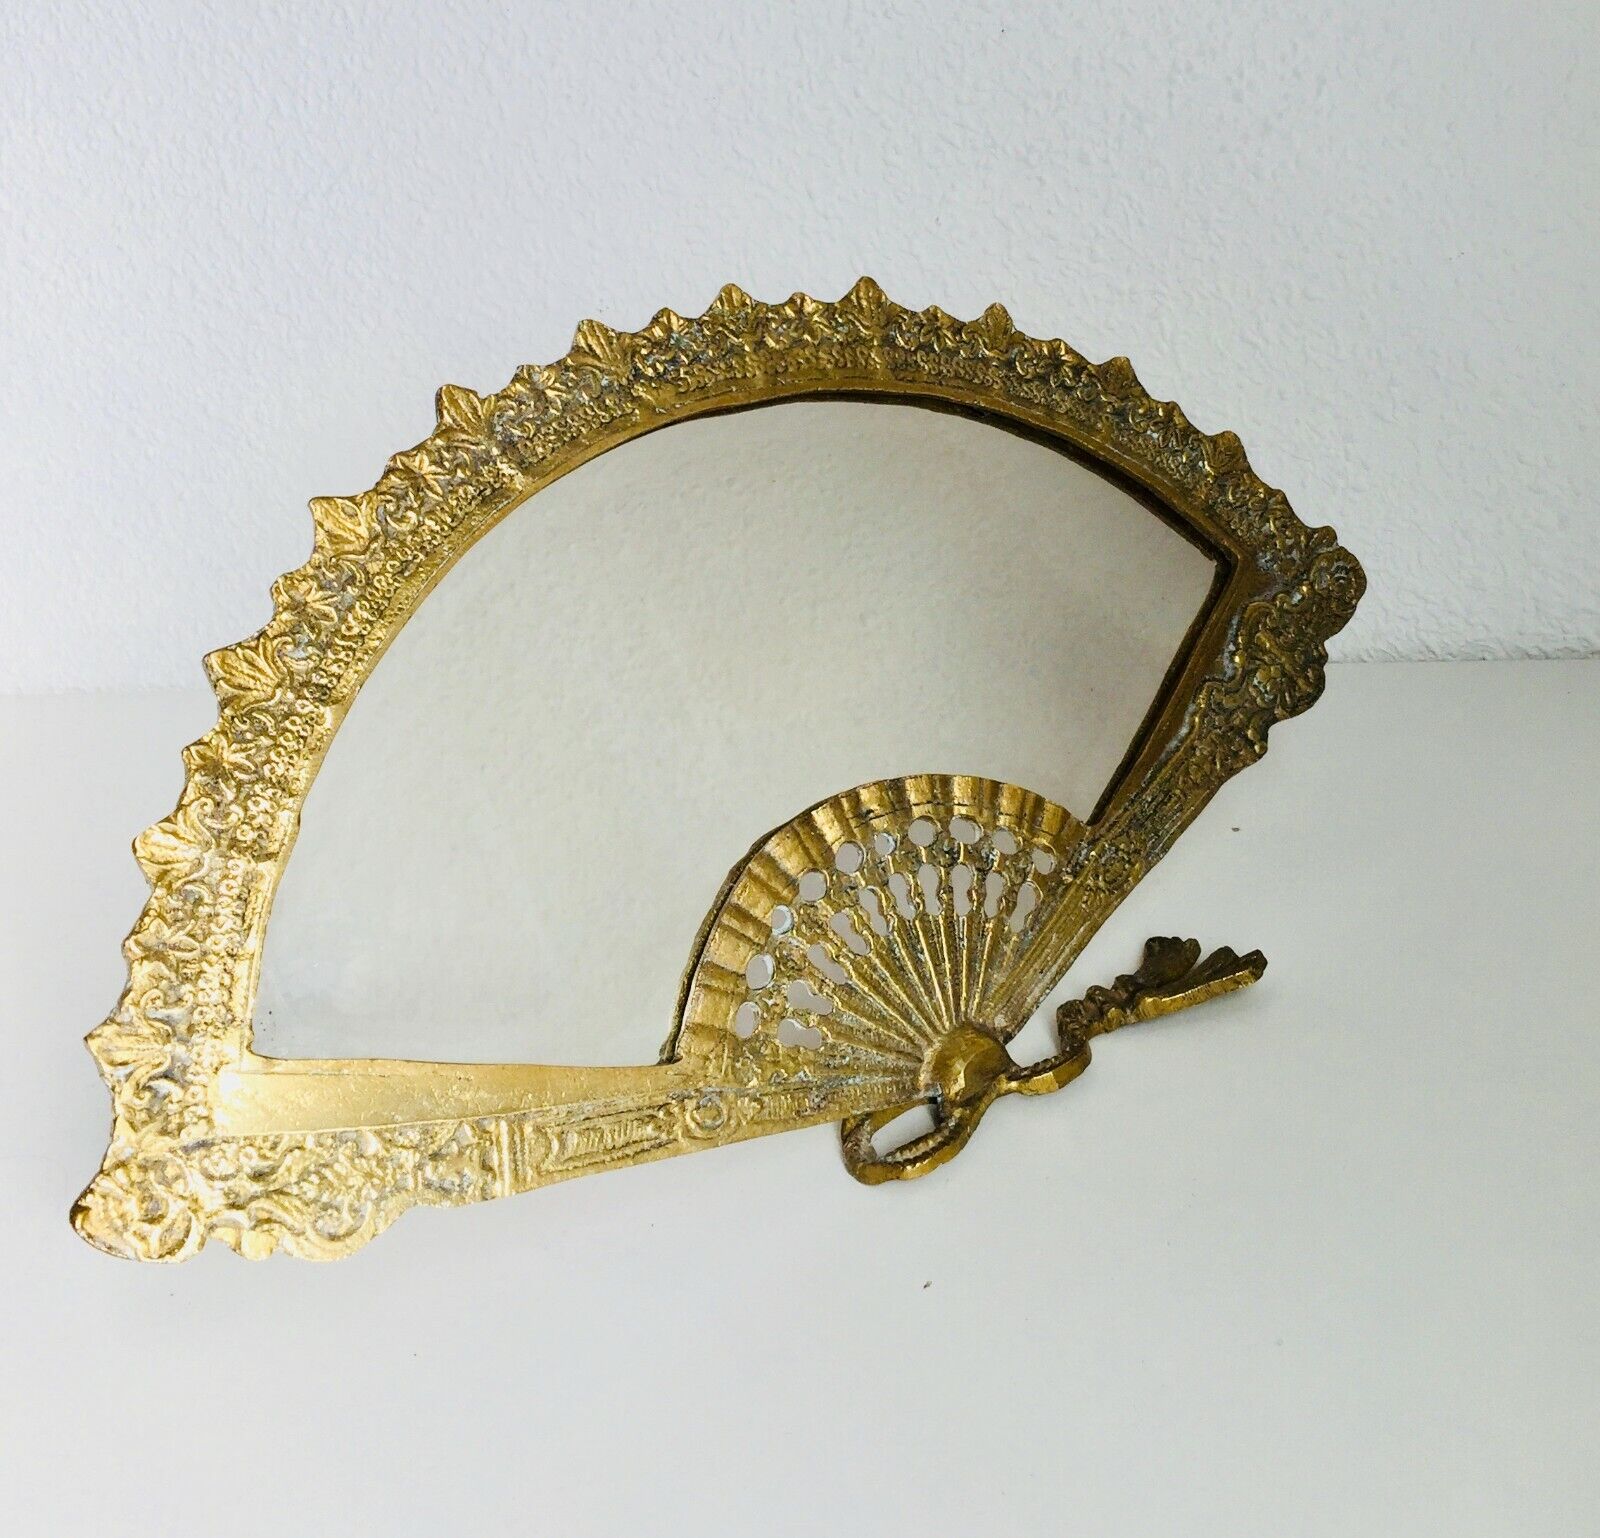 9" x 16" Antique Bronze Fan Shaped Vanity Boudoir Etched Mirror Frame Spanish